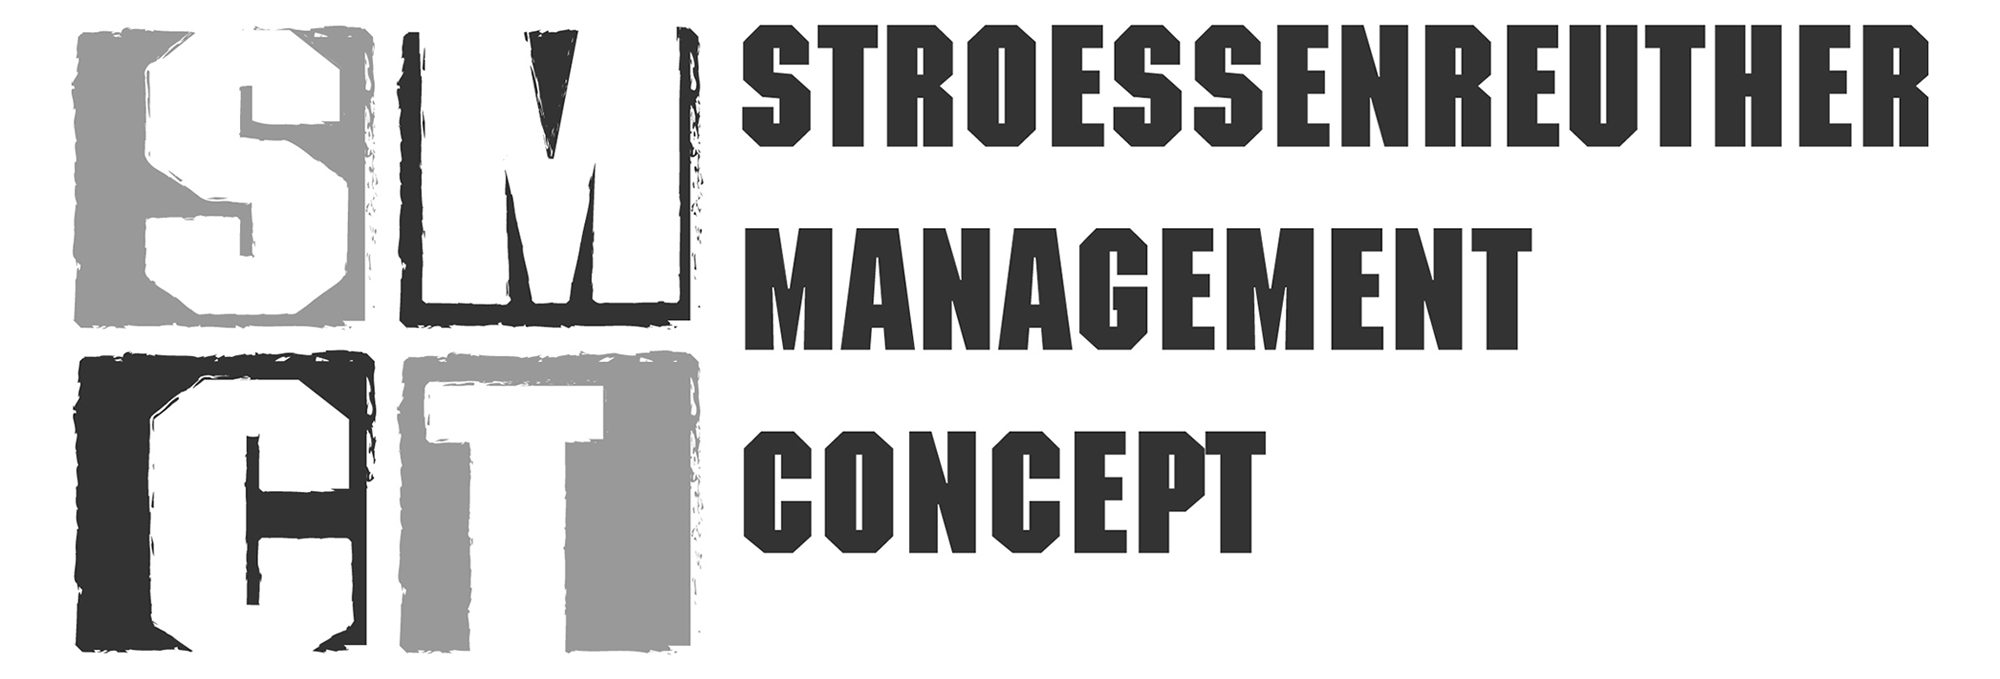 SMCT Management